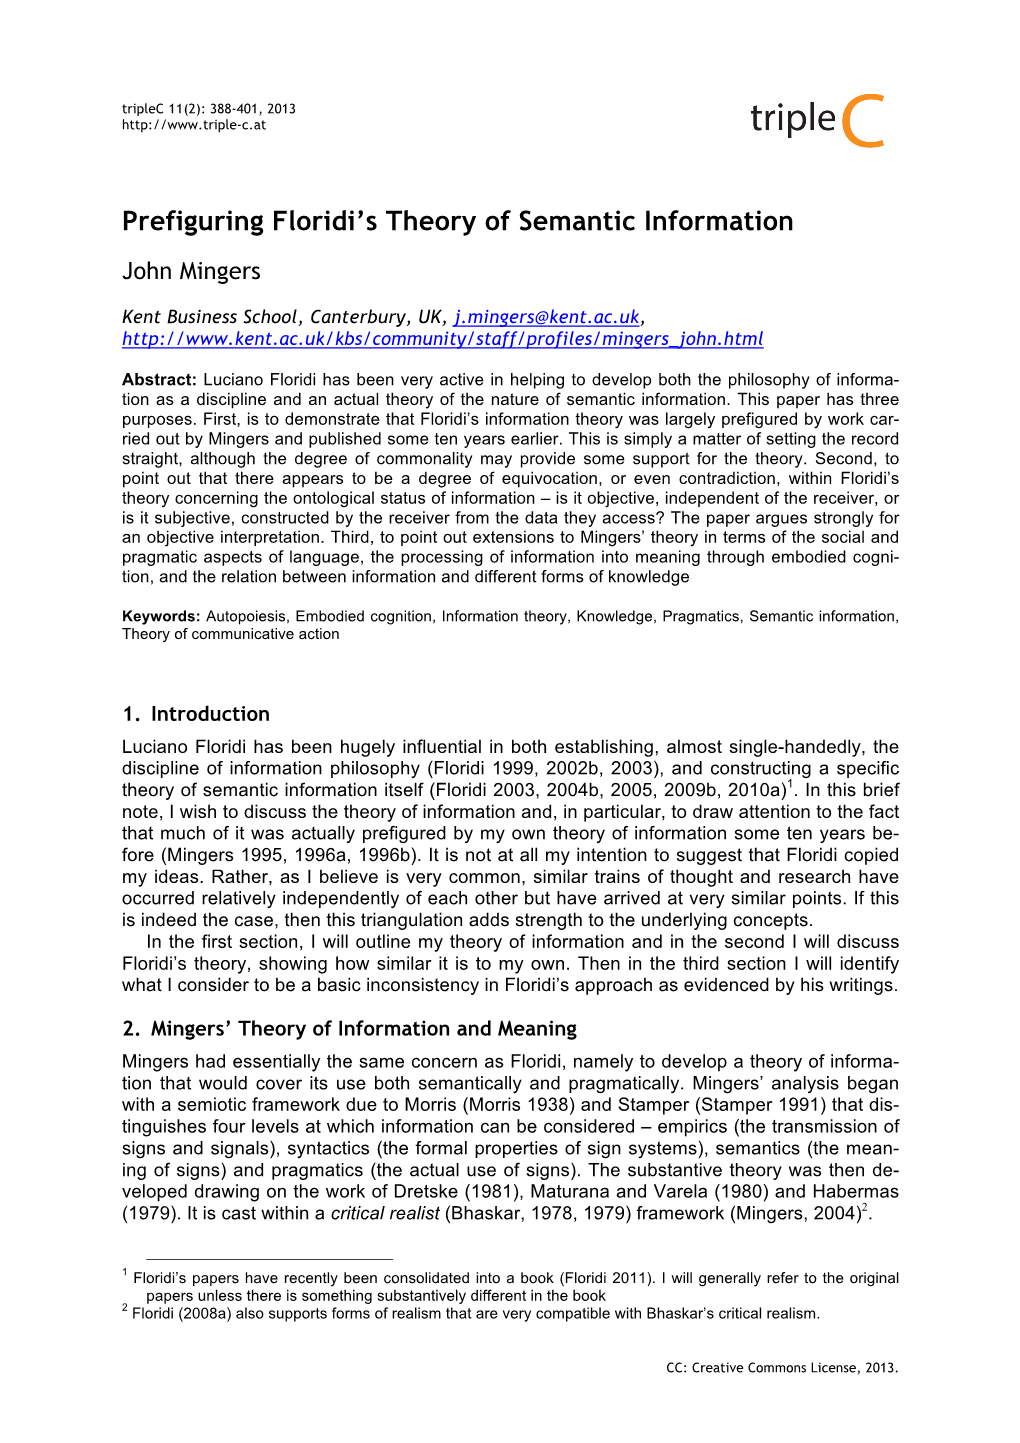 Prefiguring Floridi's Theory of Semantic Information